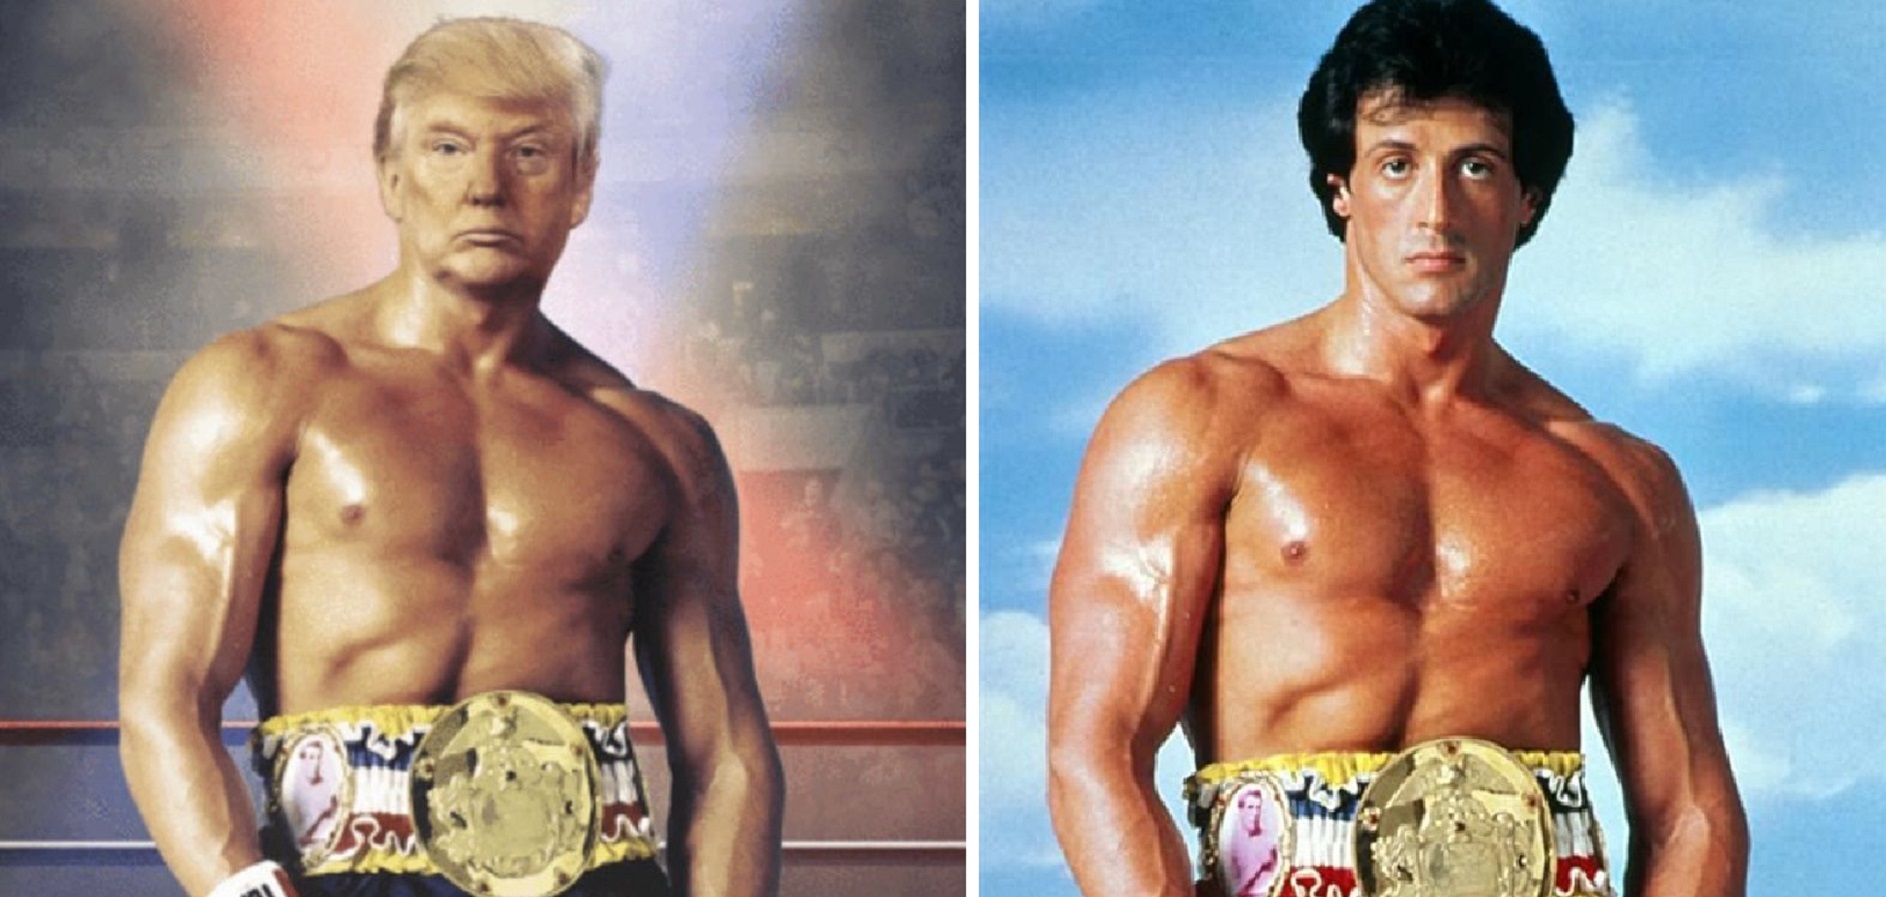 Donald Trump Tweets A Photograph Of Him As Rocky Balboa